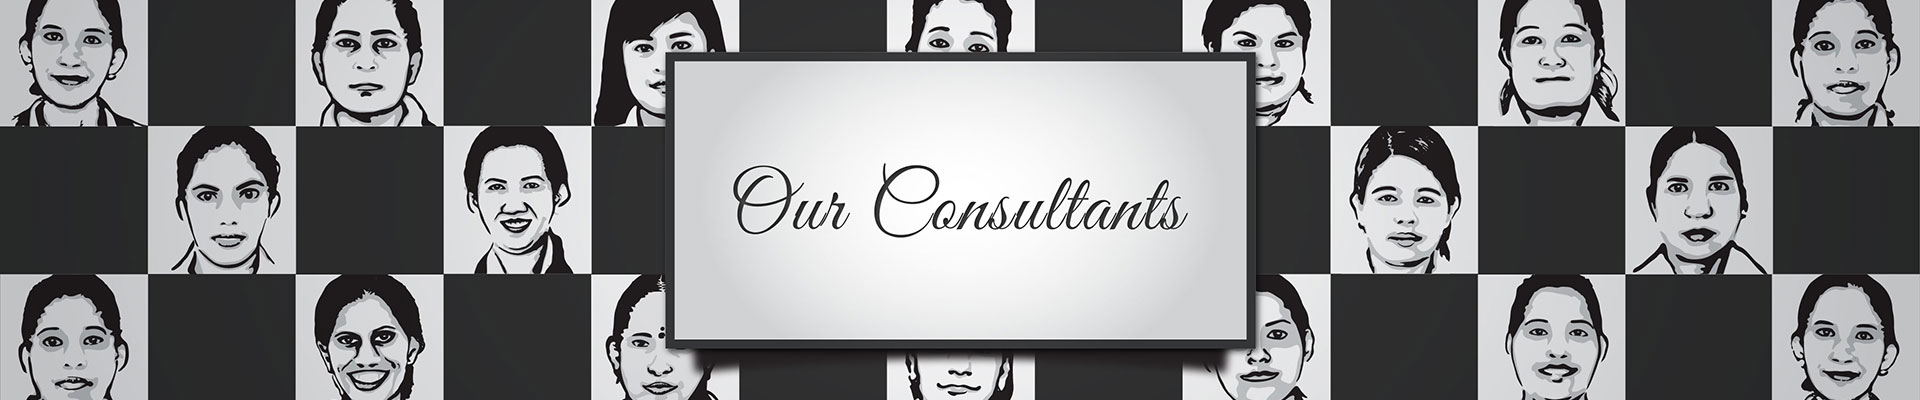 Meet Our Team of Consultants - Charisha